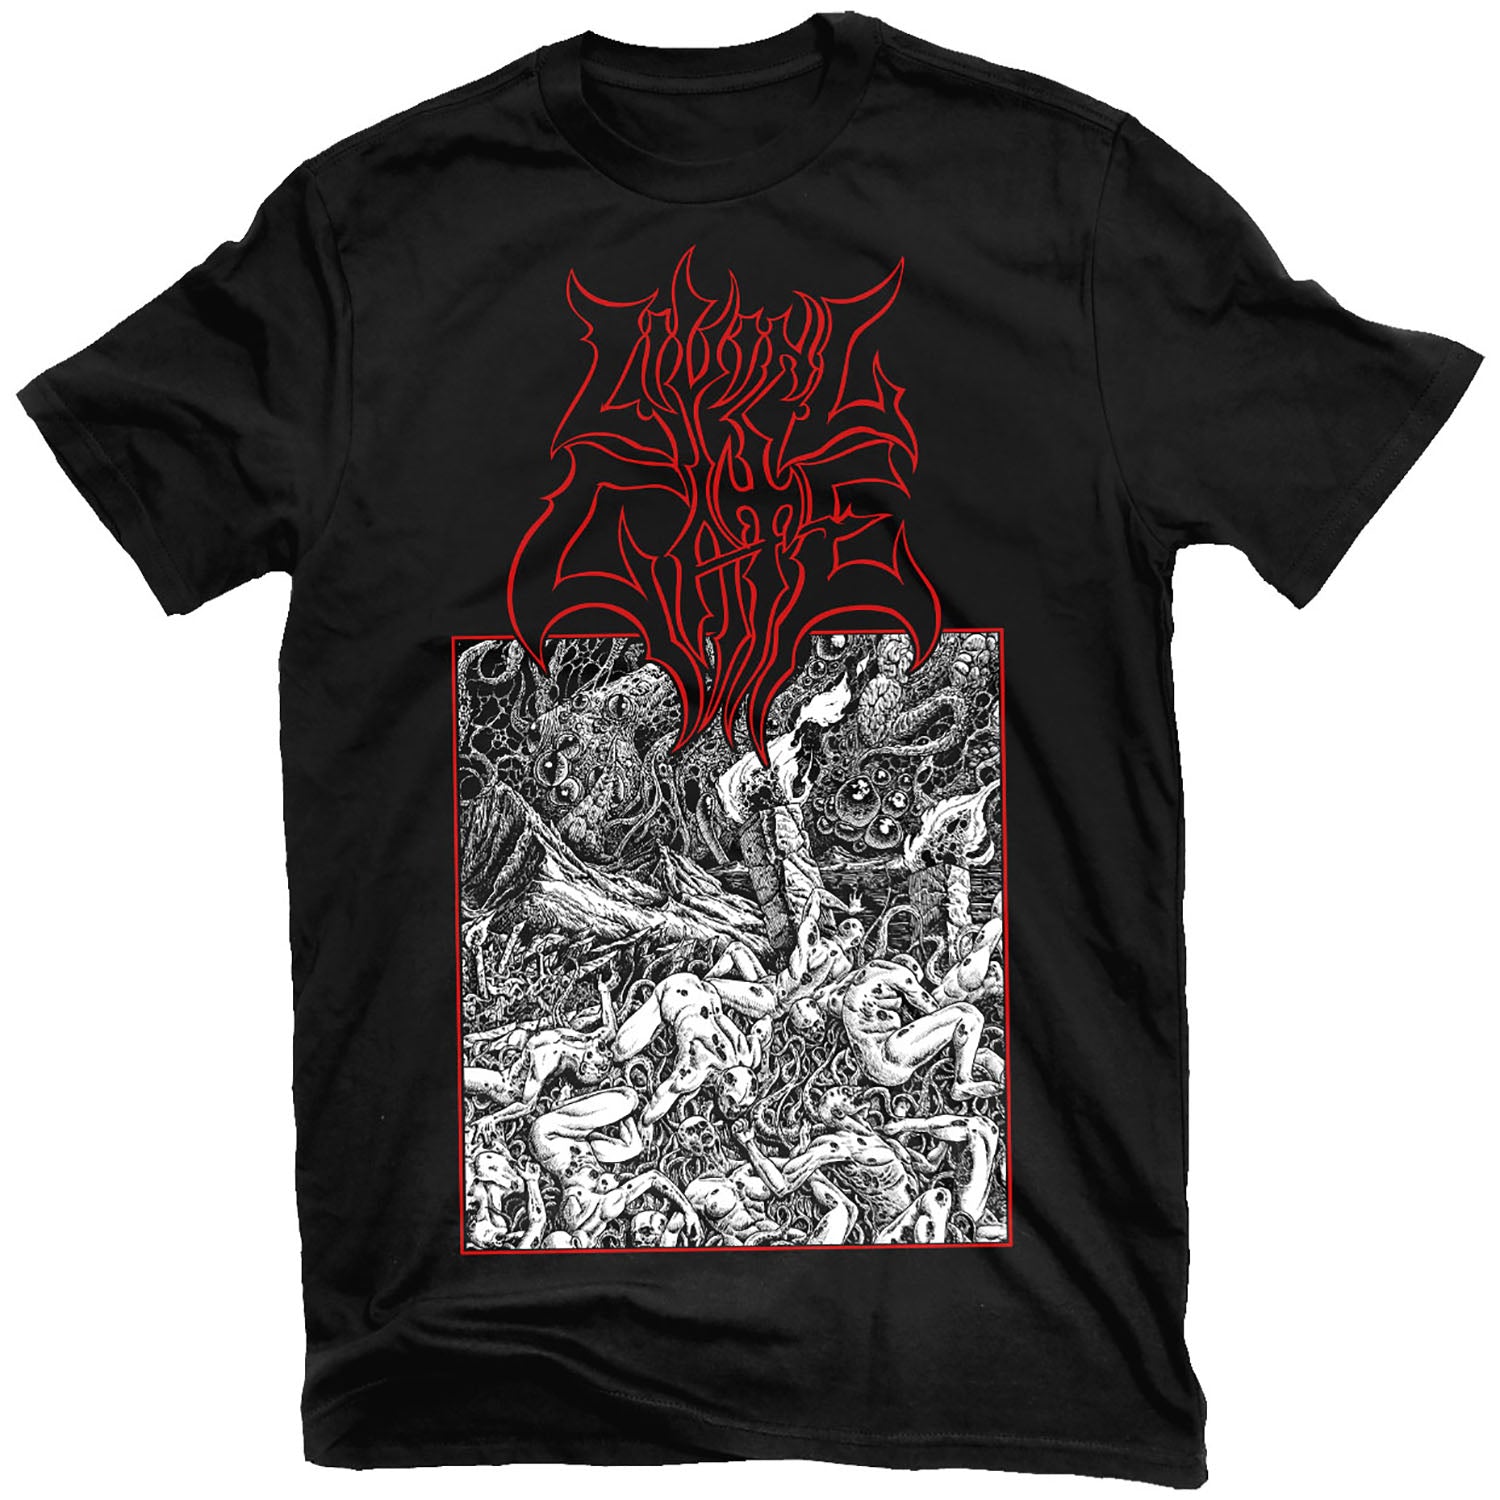 Living Gate "Deathlust" T-Shirt